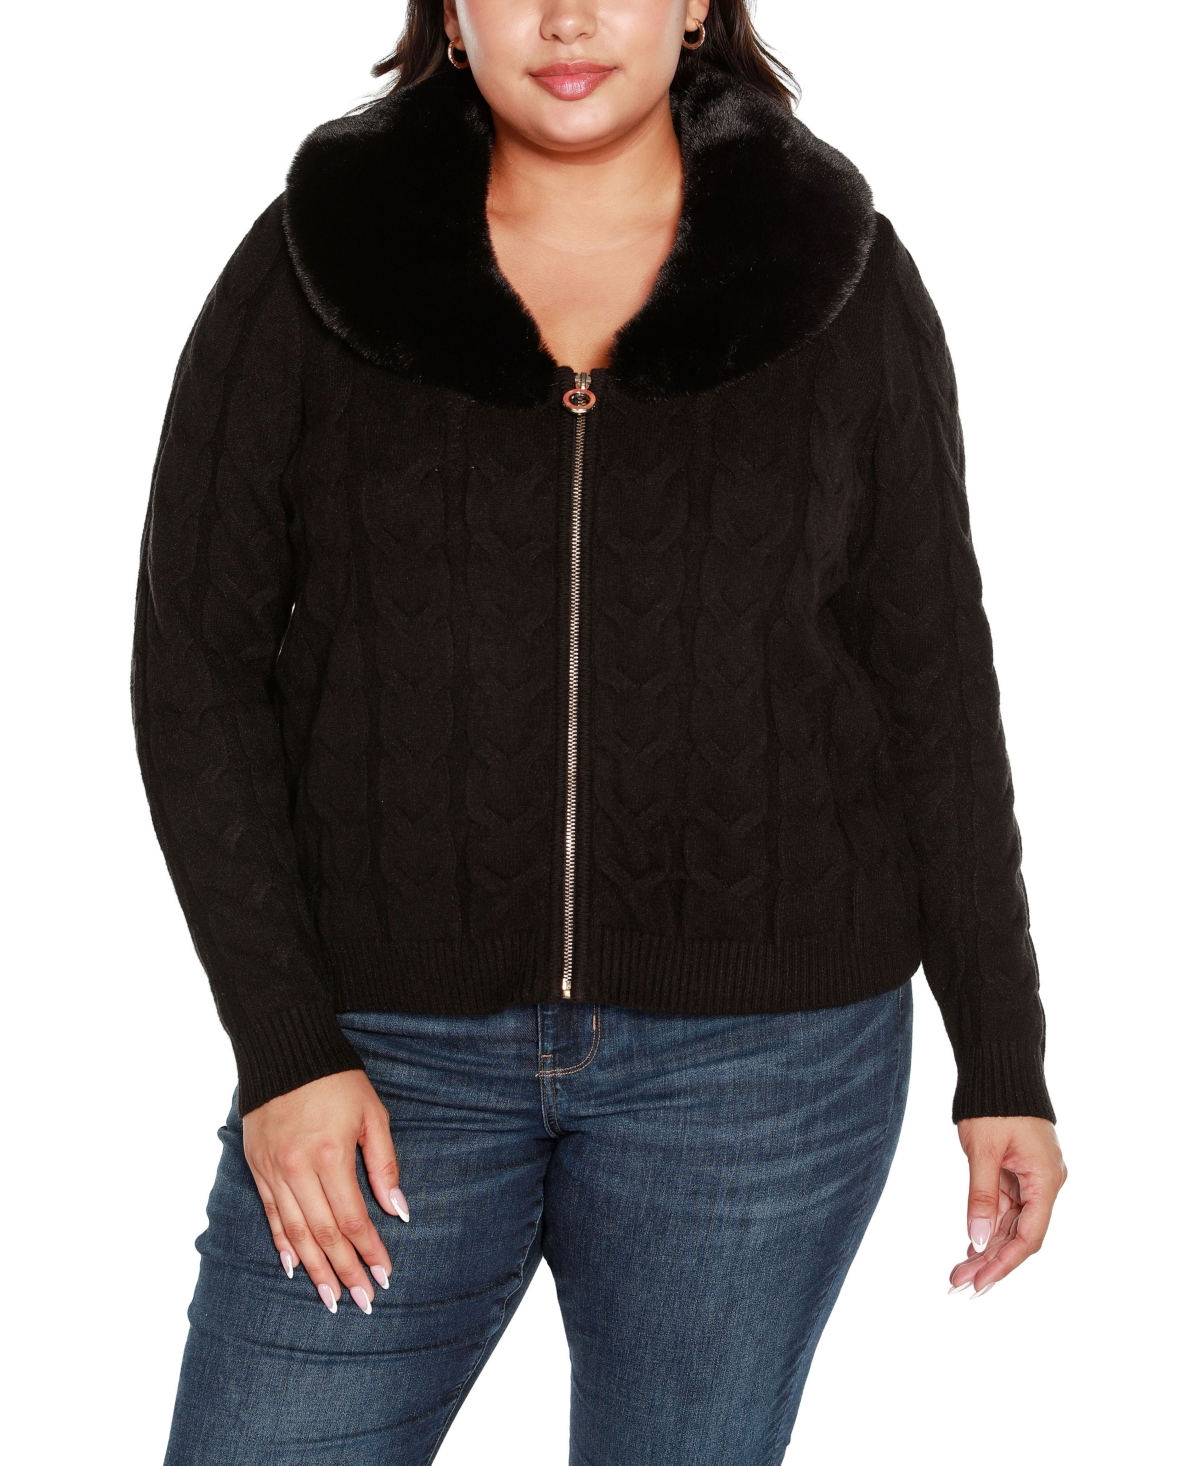 Belldini Black Label Plus Size Faux Fur Collared Cable Cardigan Sweater